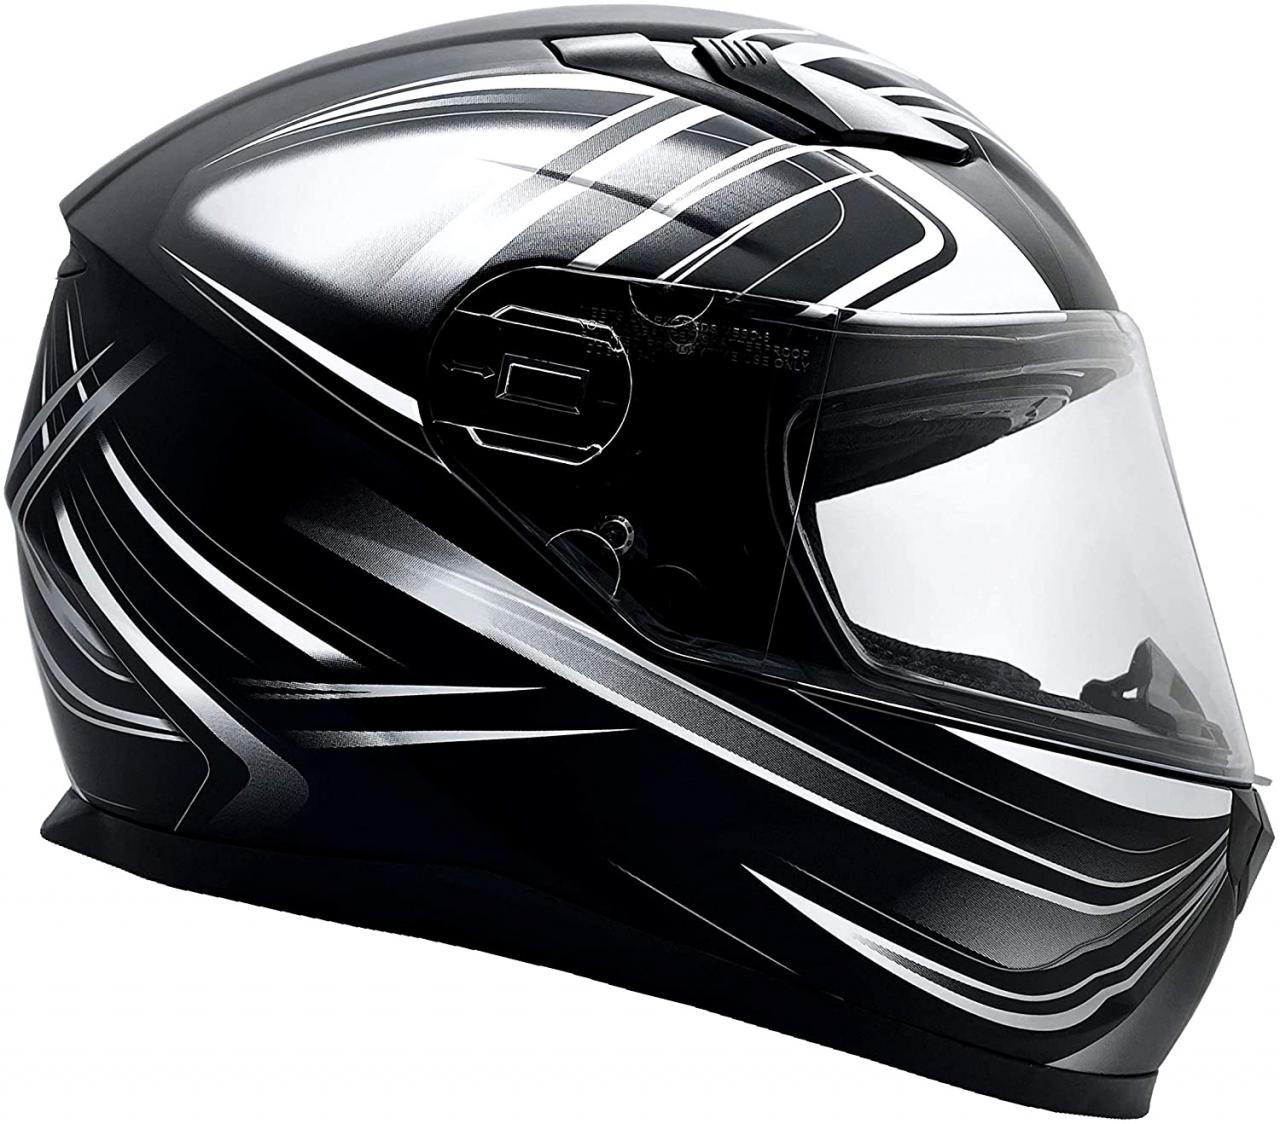 Buy Typhoon Adult Full Face Motorcycle Helmet w/Drop Down Sun Shield DOT  Certified - Same Day Shipping (Matte Grey, Medium) Online in Hong Kong.  B08XSM4FLG